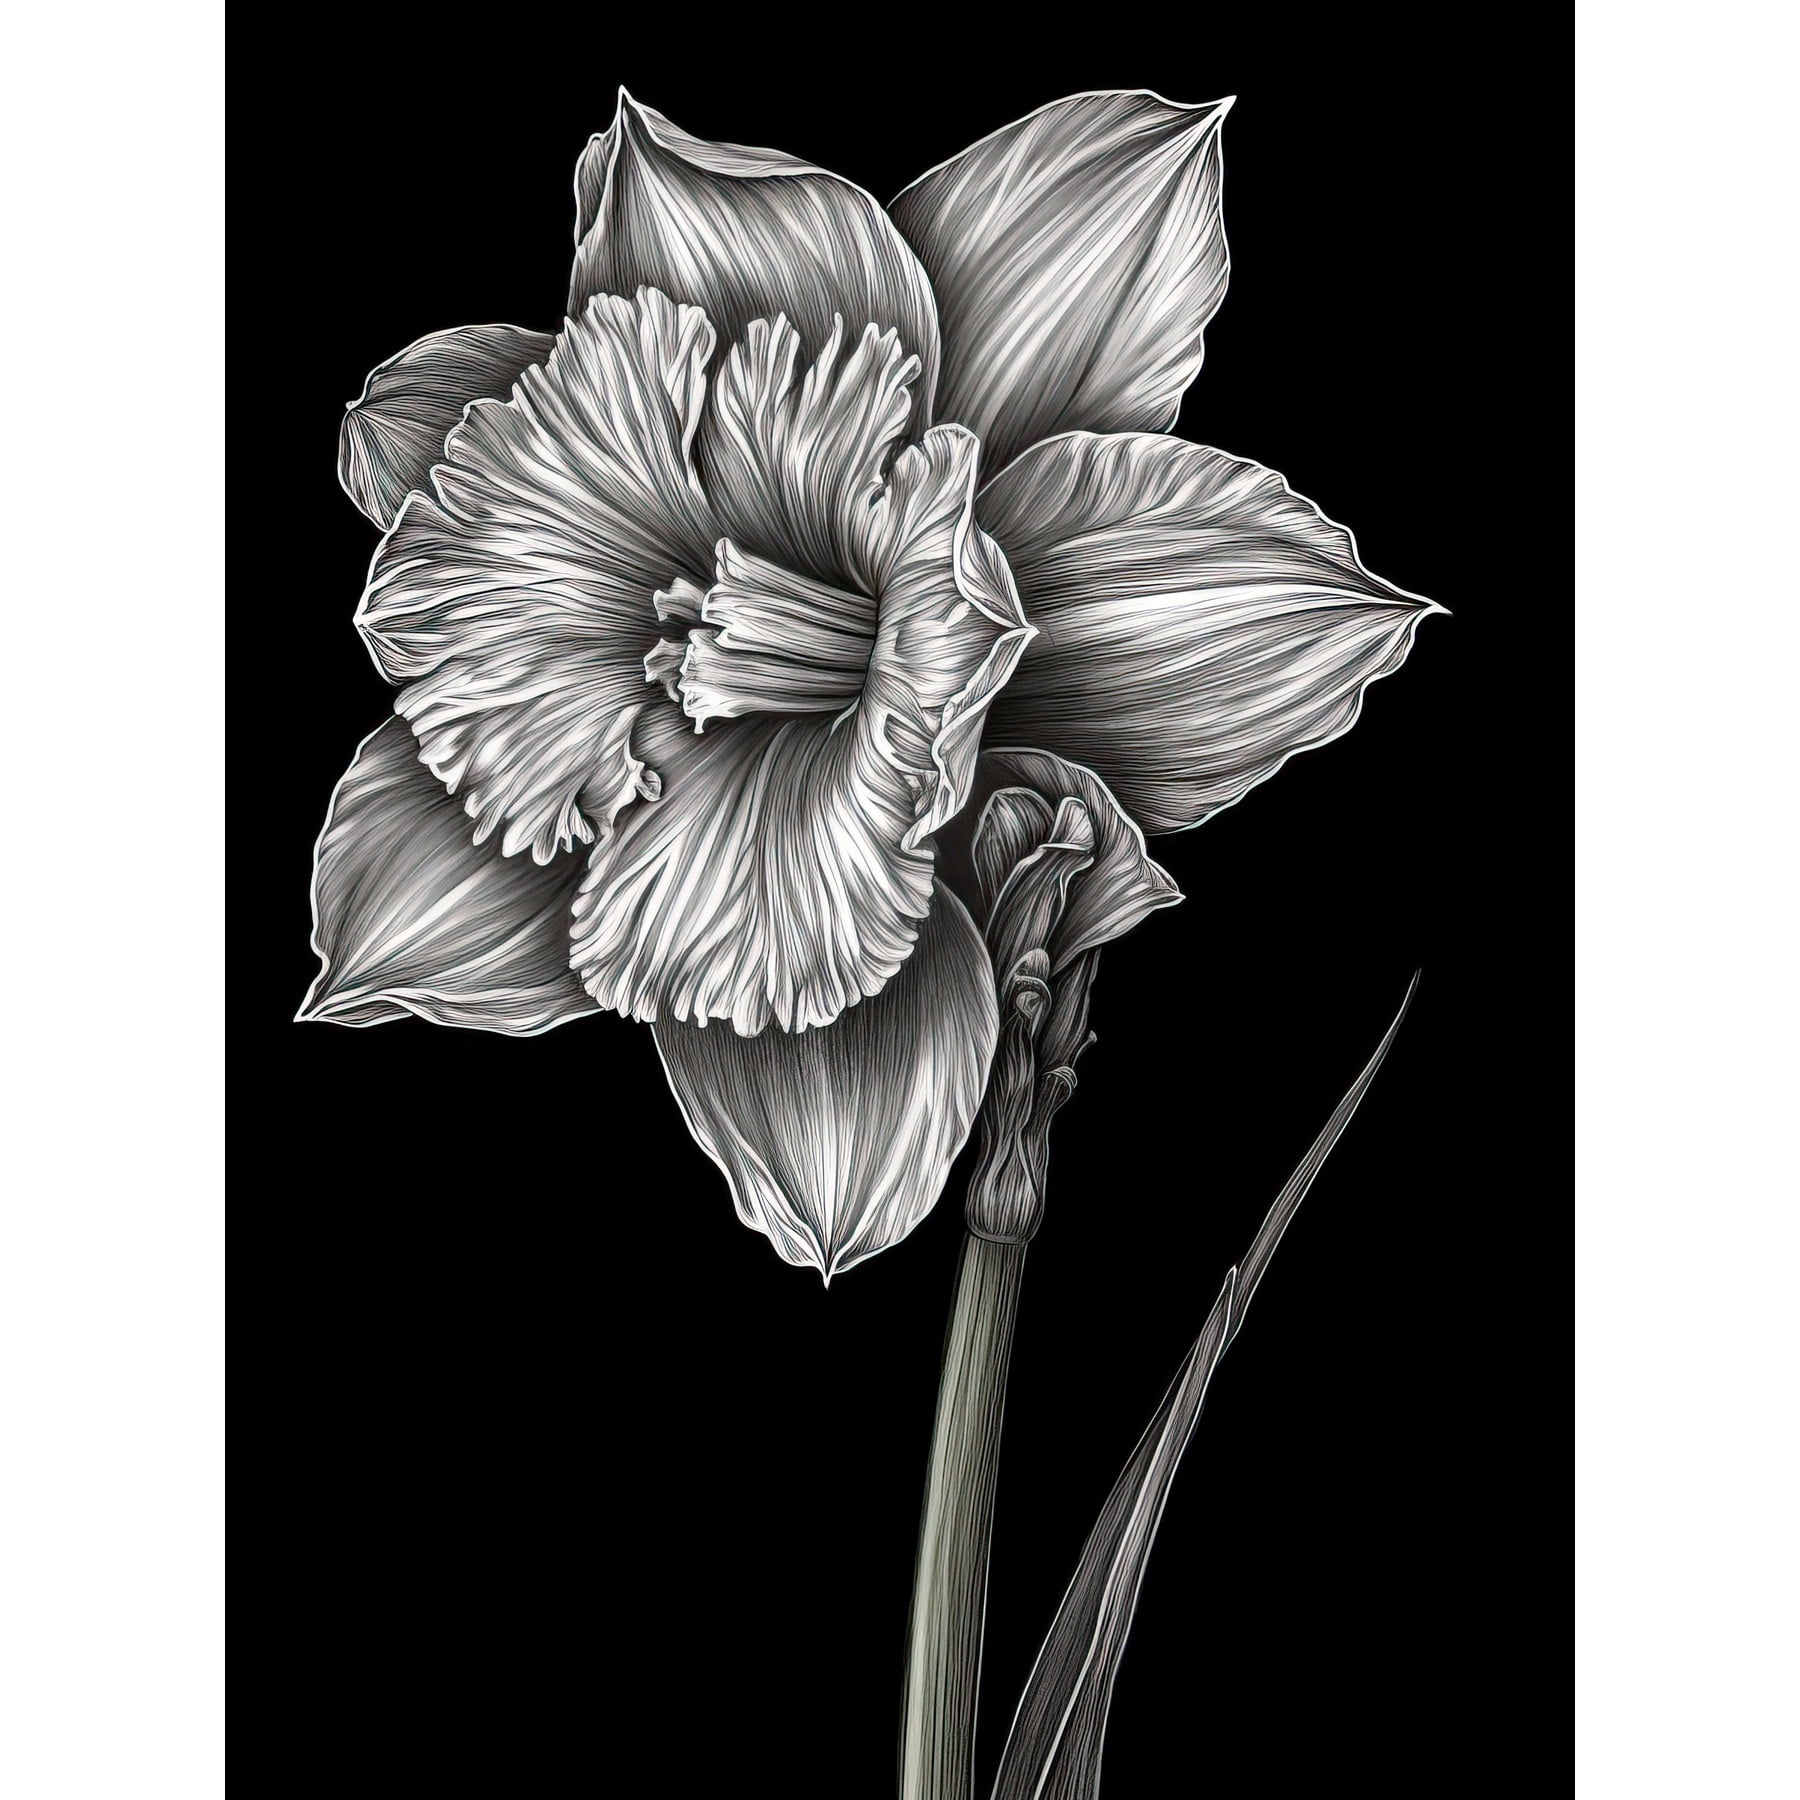 Narcissus Print, Daffodil Drawing, Floral Art, Black and White Botanical  Sketch, Daffodil Sketch, Pen Ink Illustration, Flower Poster - Etsy